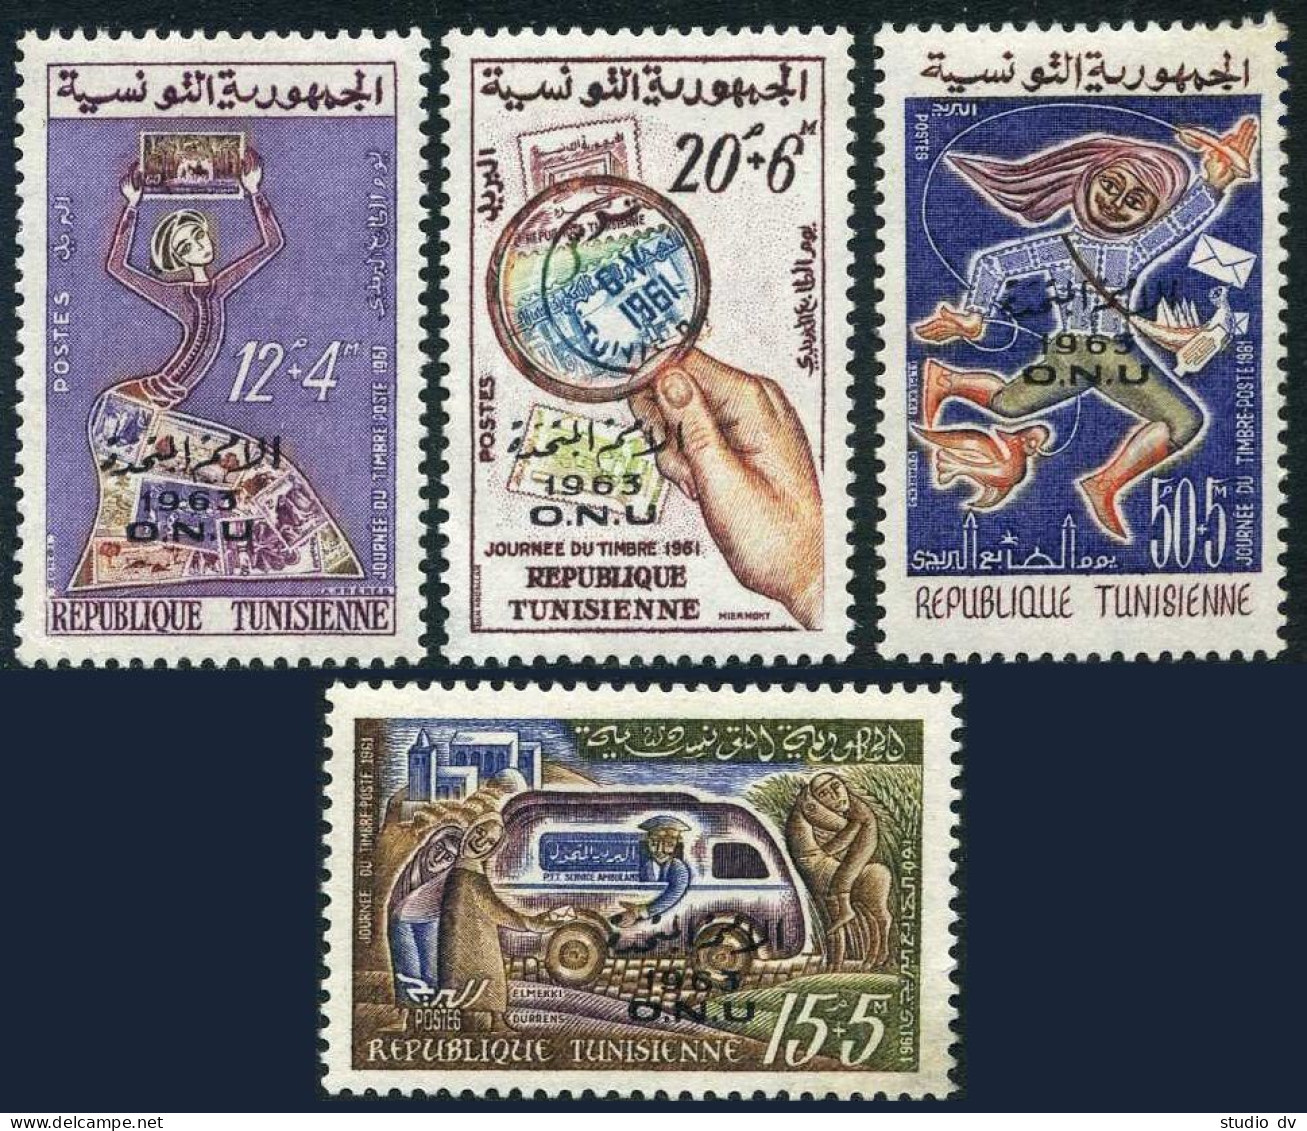 Tunisia B134-B137, MNH. Mi 580-583. United Nations Day 1963. Mail Truck.Dancer. - Tunisia